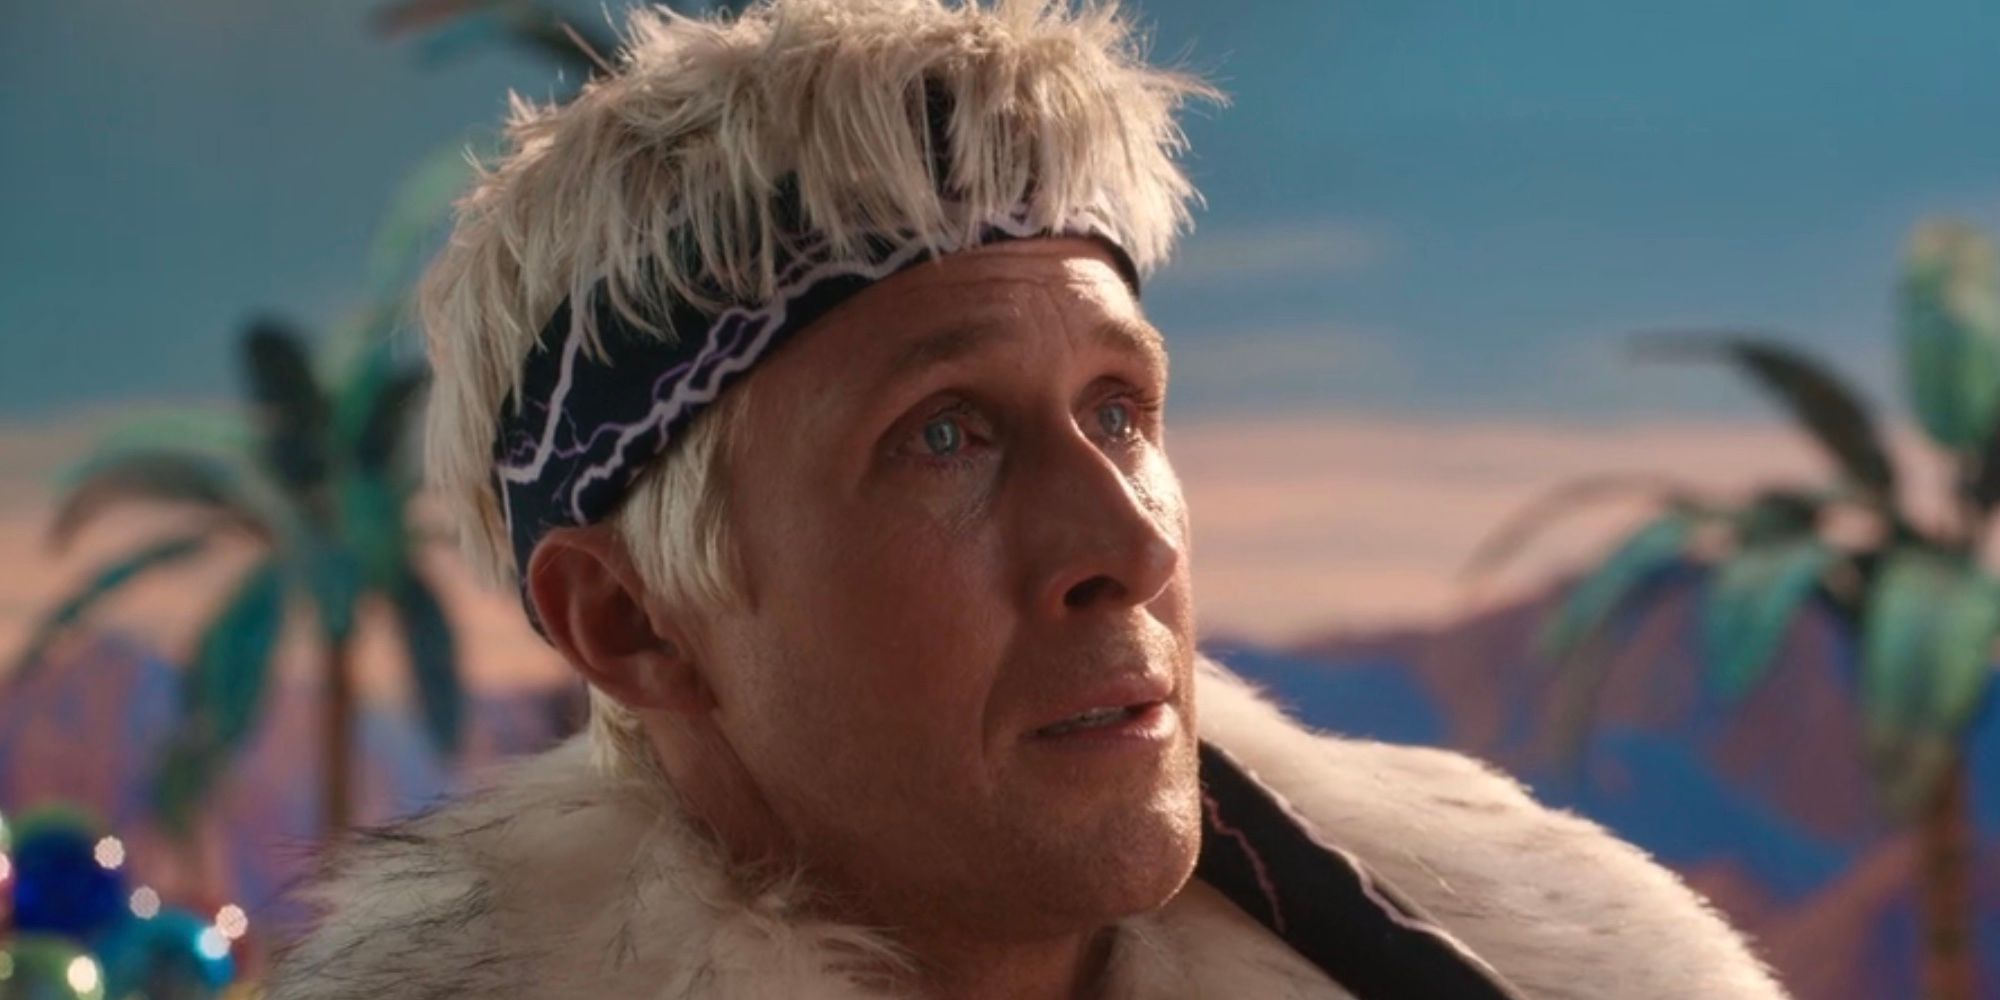 A teary-eyed Ken (Ryan Gosling) wearing a headband and fur coat looks devastated in Barbie.